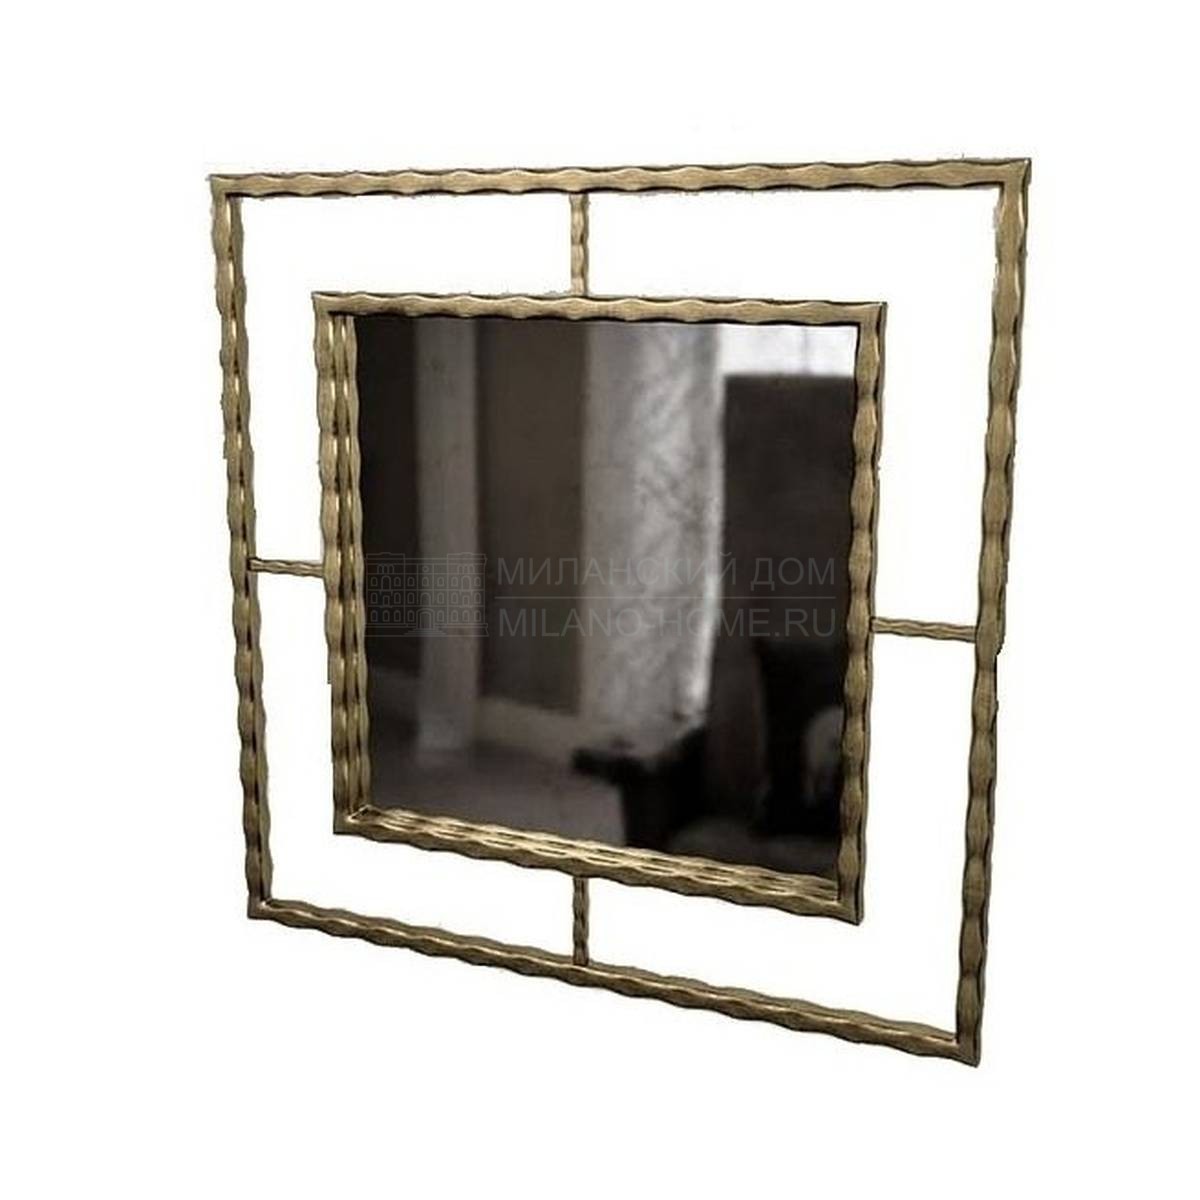 Зеркало настенное H-1213 mirror из Испании фабрики GUADARTE